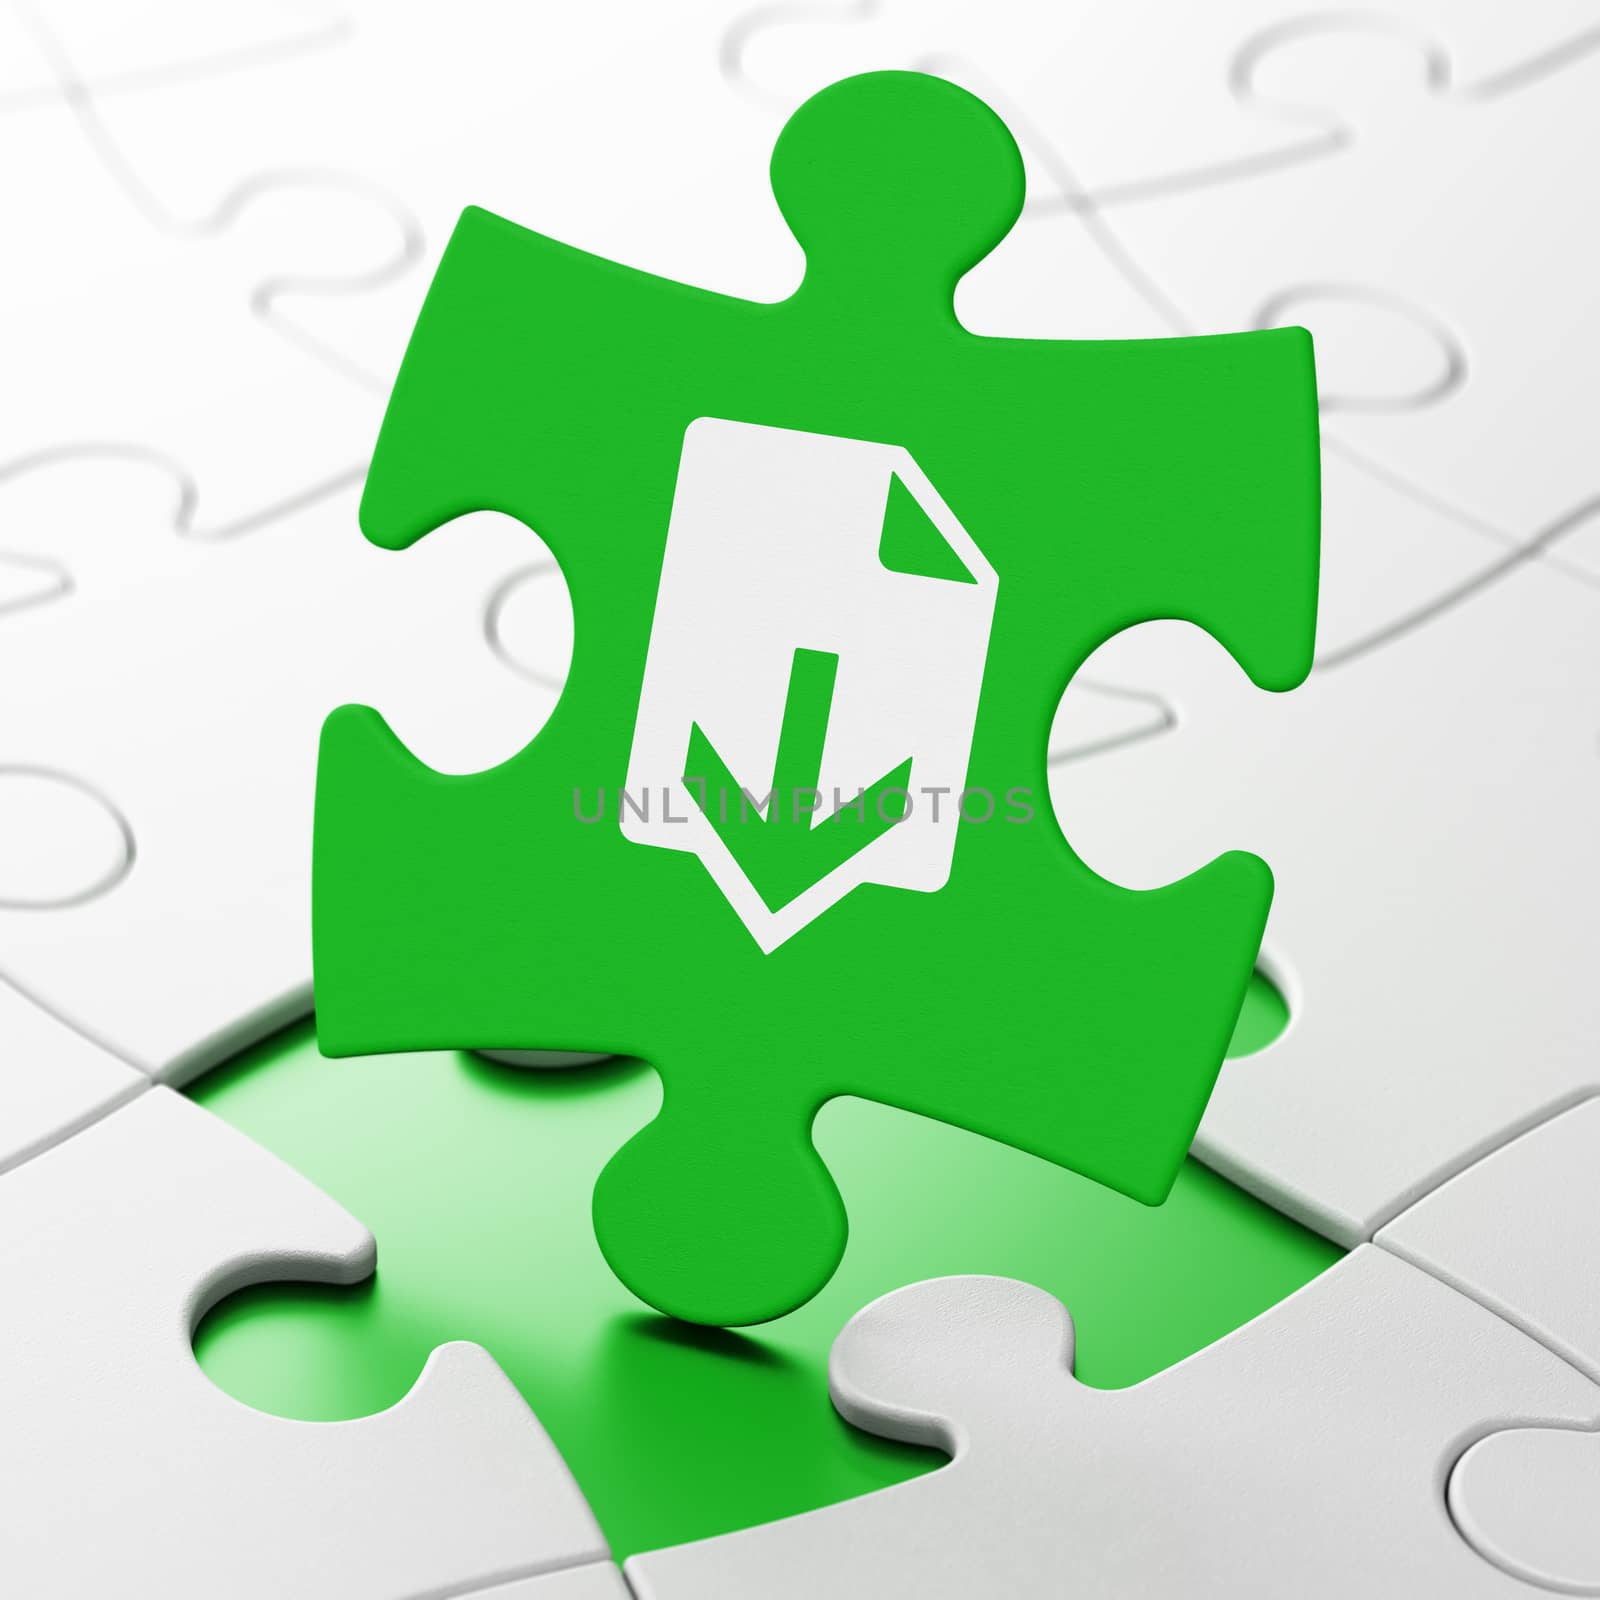 Web design concept: Download on Green puzzle pieces background, 3d render